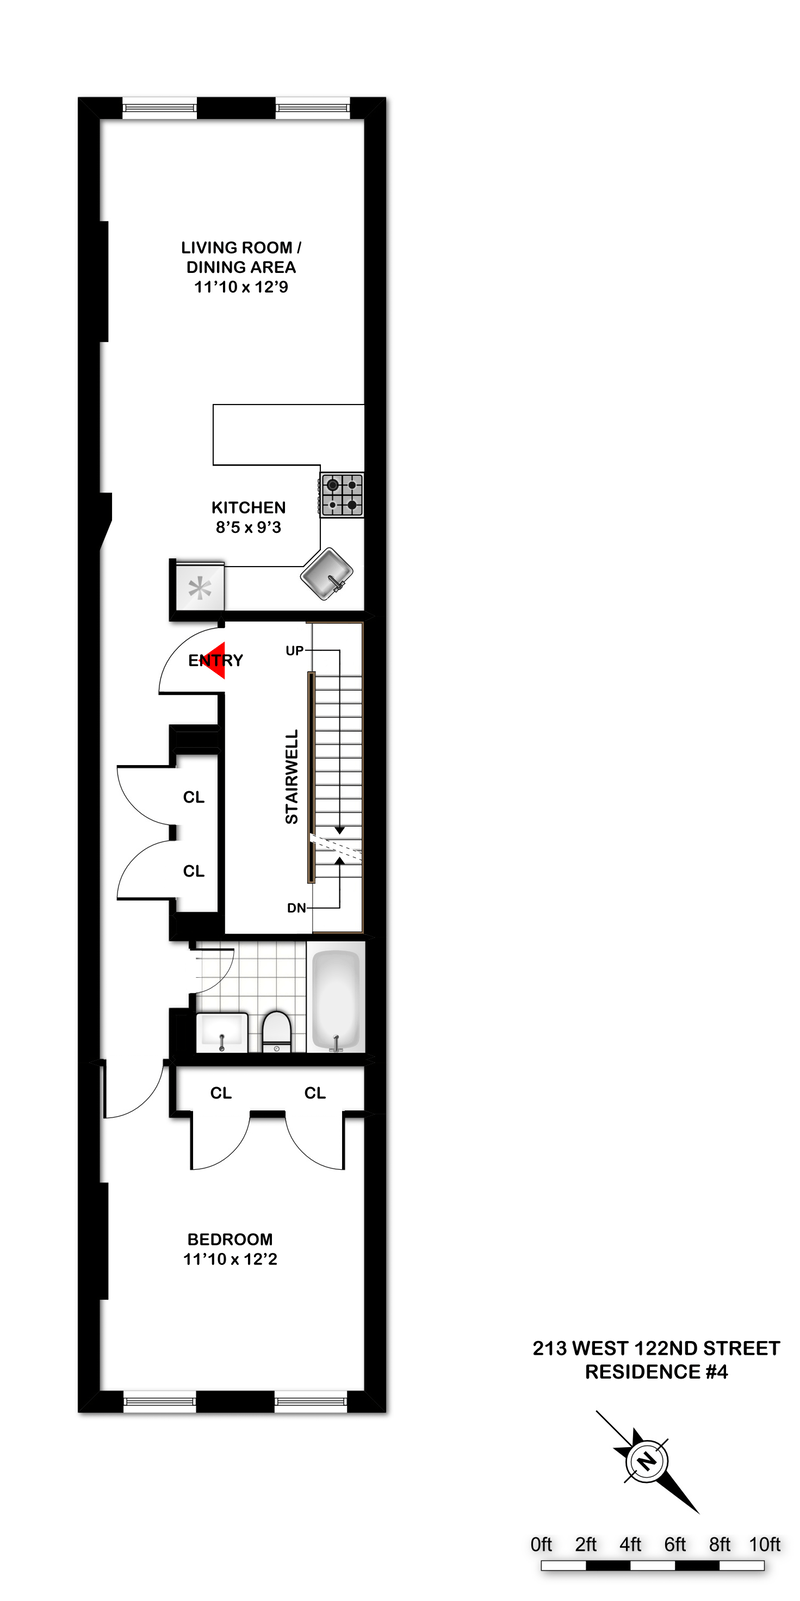 Floorplan for 213 West 122nd Street